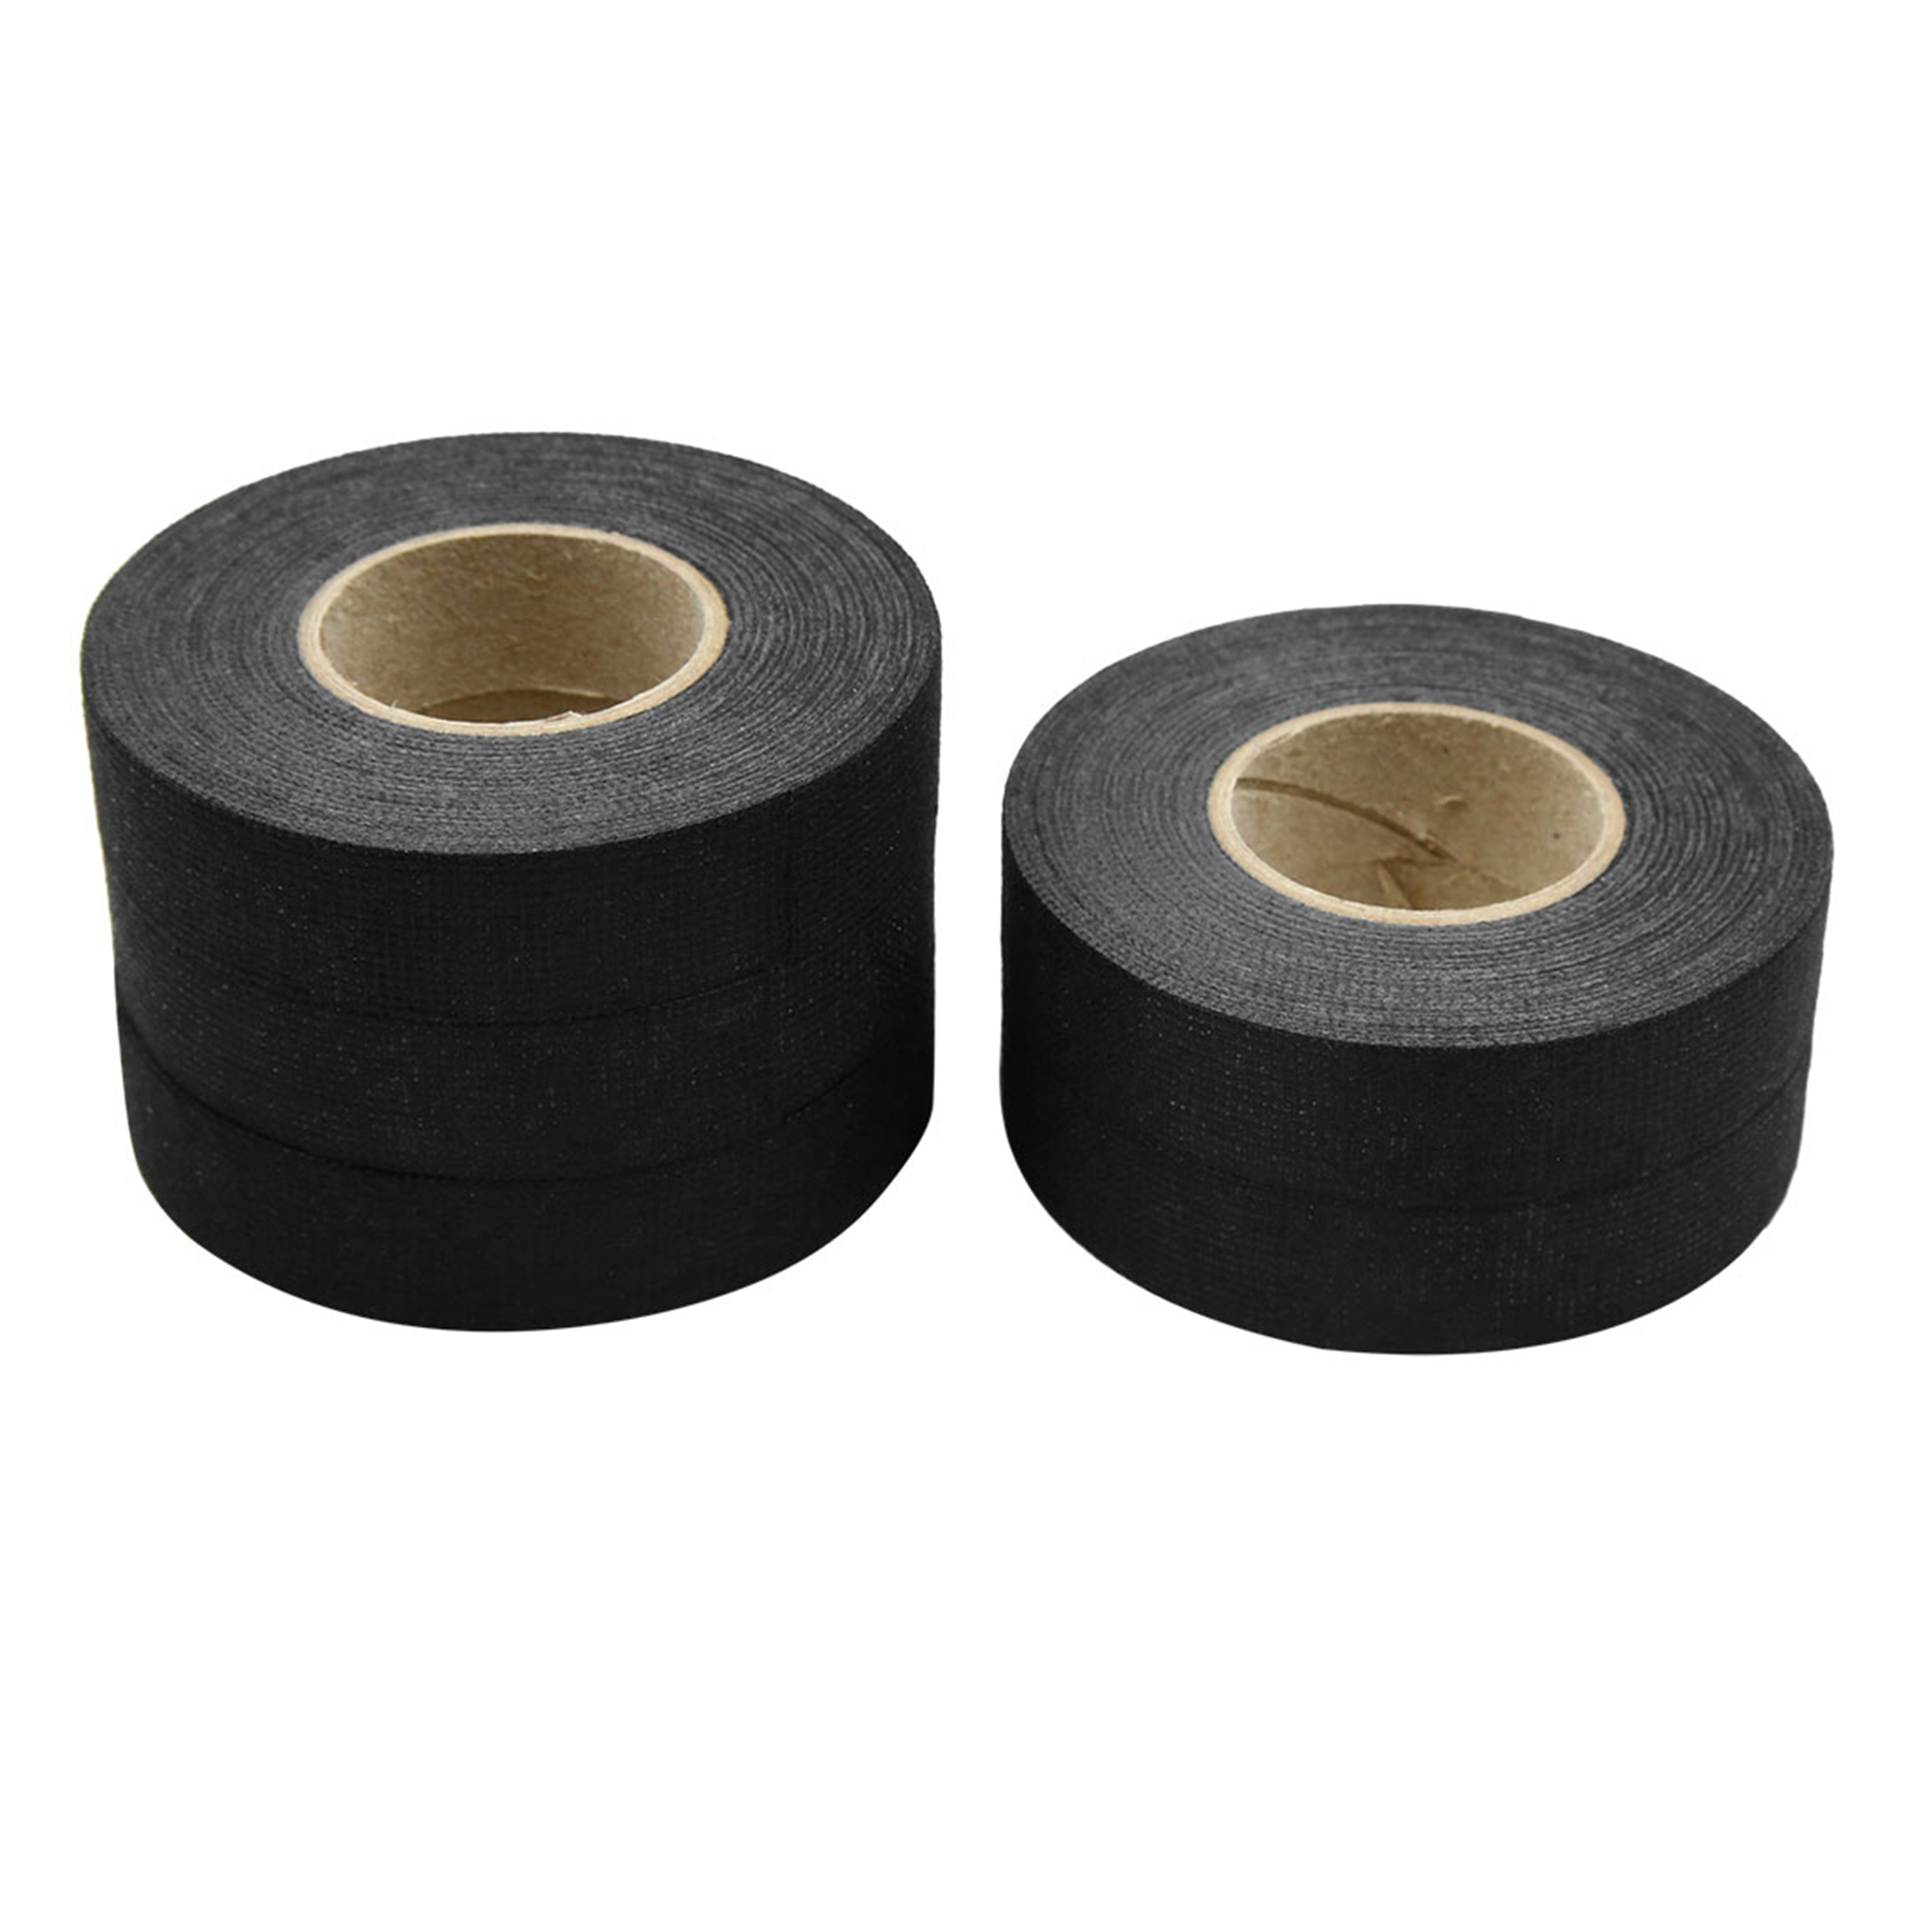 Unique Bargains 5pcs Black Adhesive Cloth Fabric Car Wire Harness Looms Tape 19mm x 15m